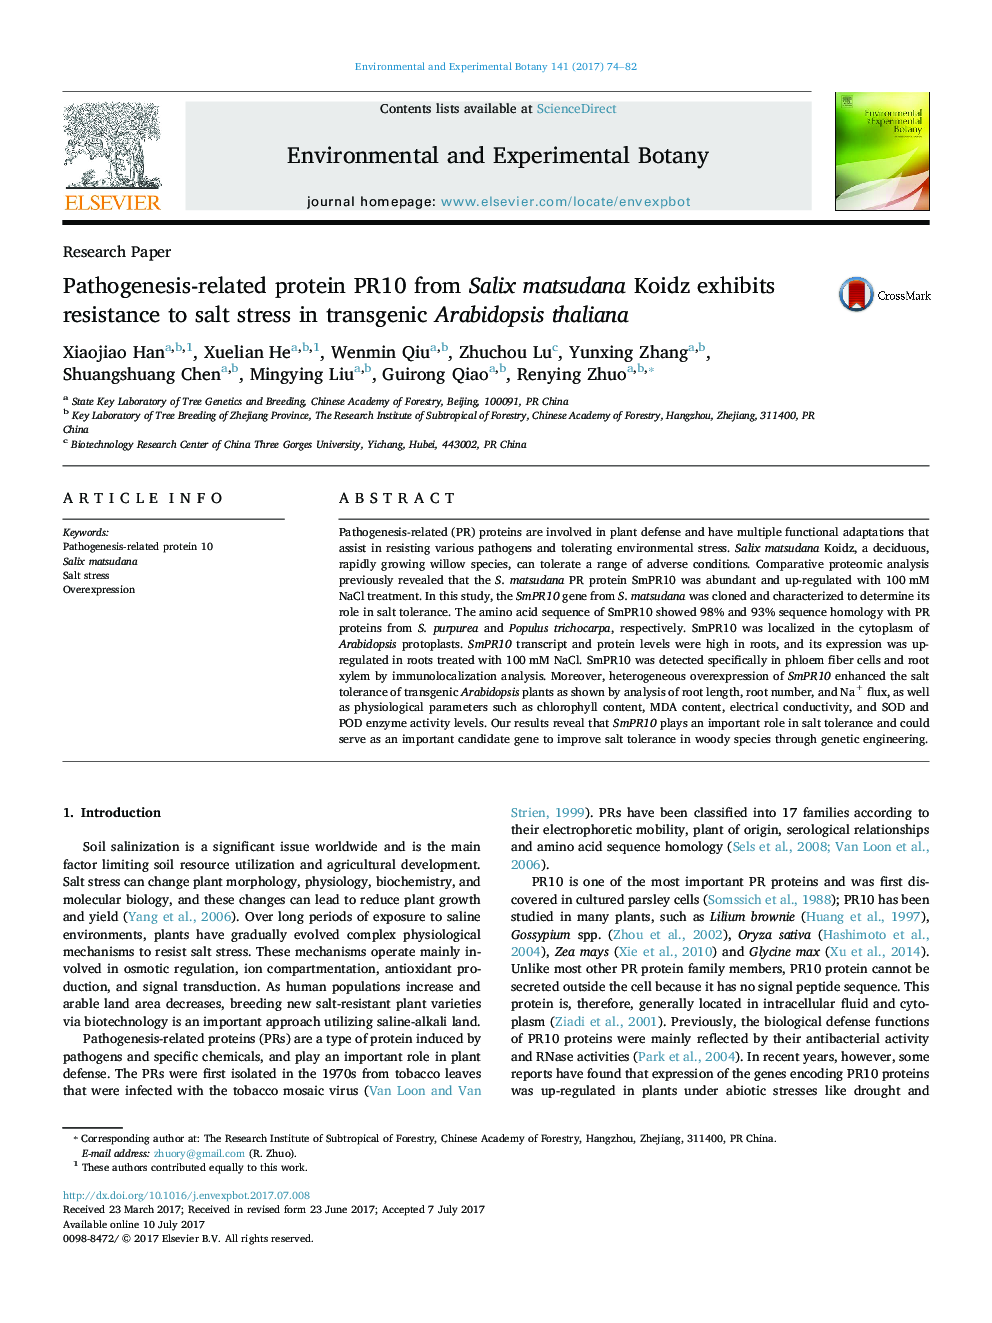 Research PaperPathogenesis-related protein PR10 from Salix matsudana Koidz exhibits resistance to salt stress in transgenic Arabidopsis thaliana